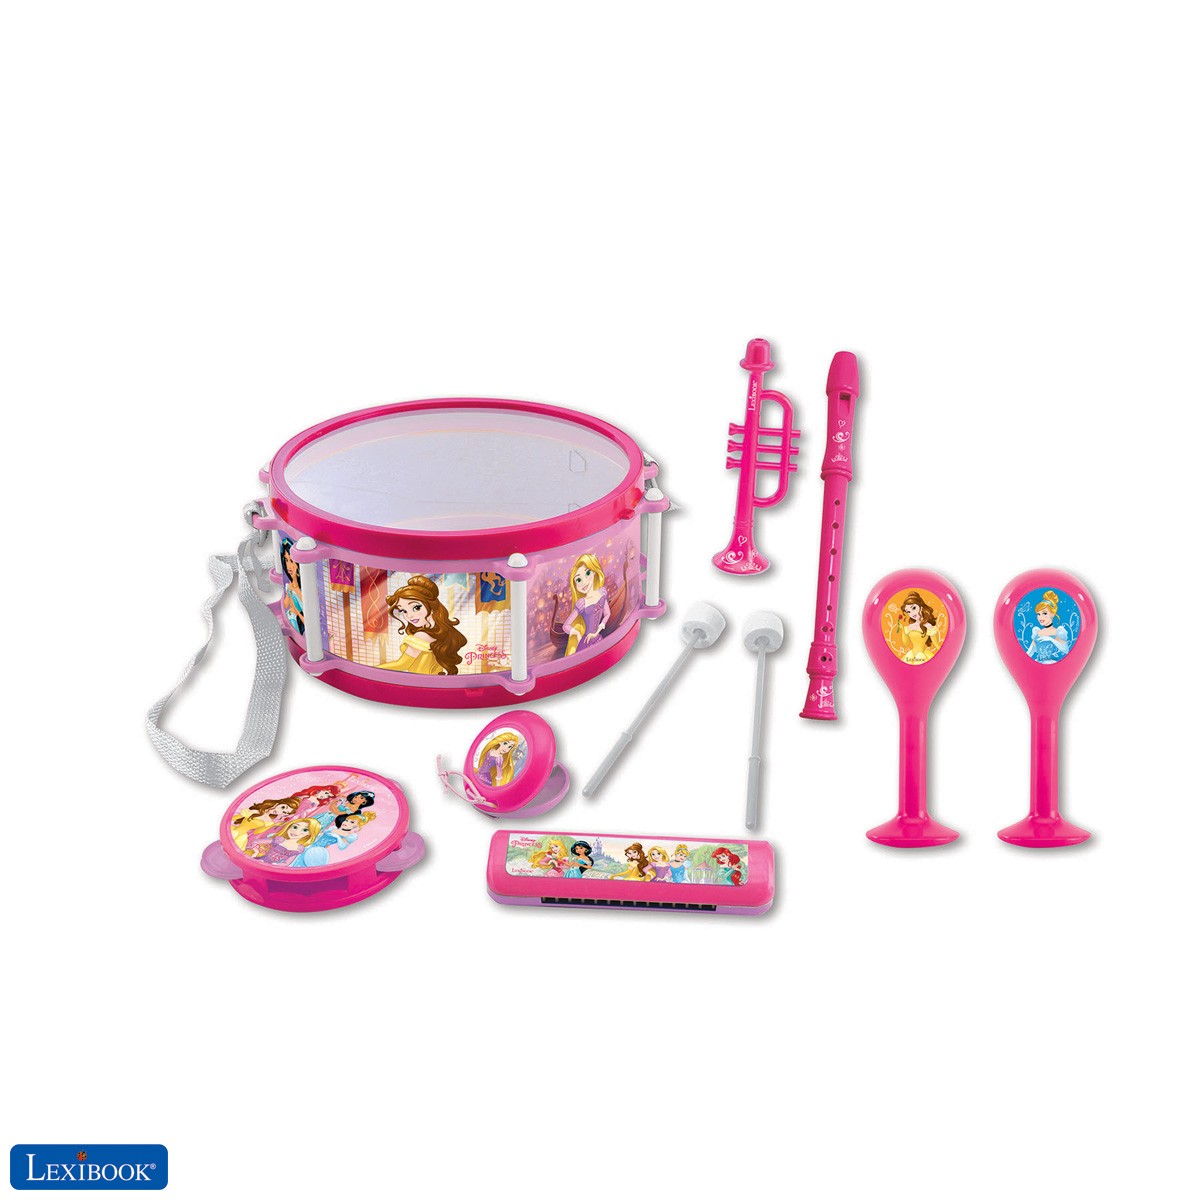 Princesse Disney Cendrillon, belle, jouet musical